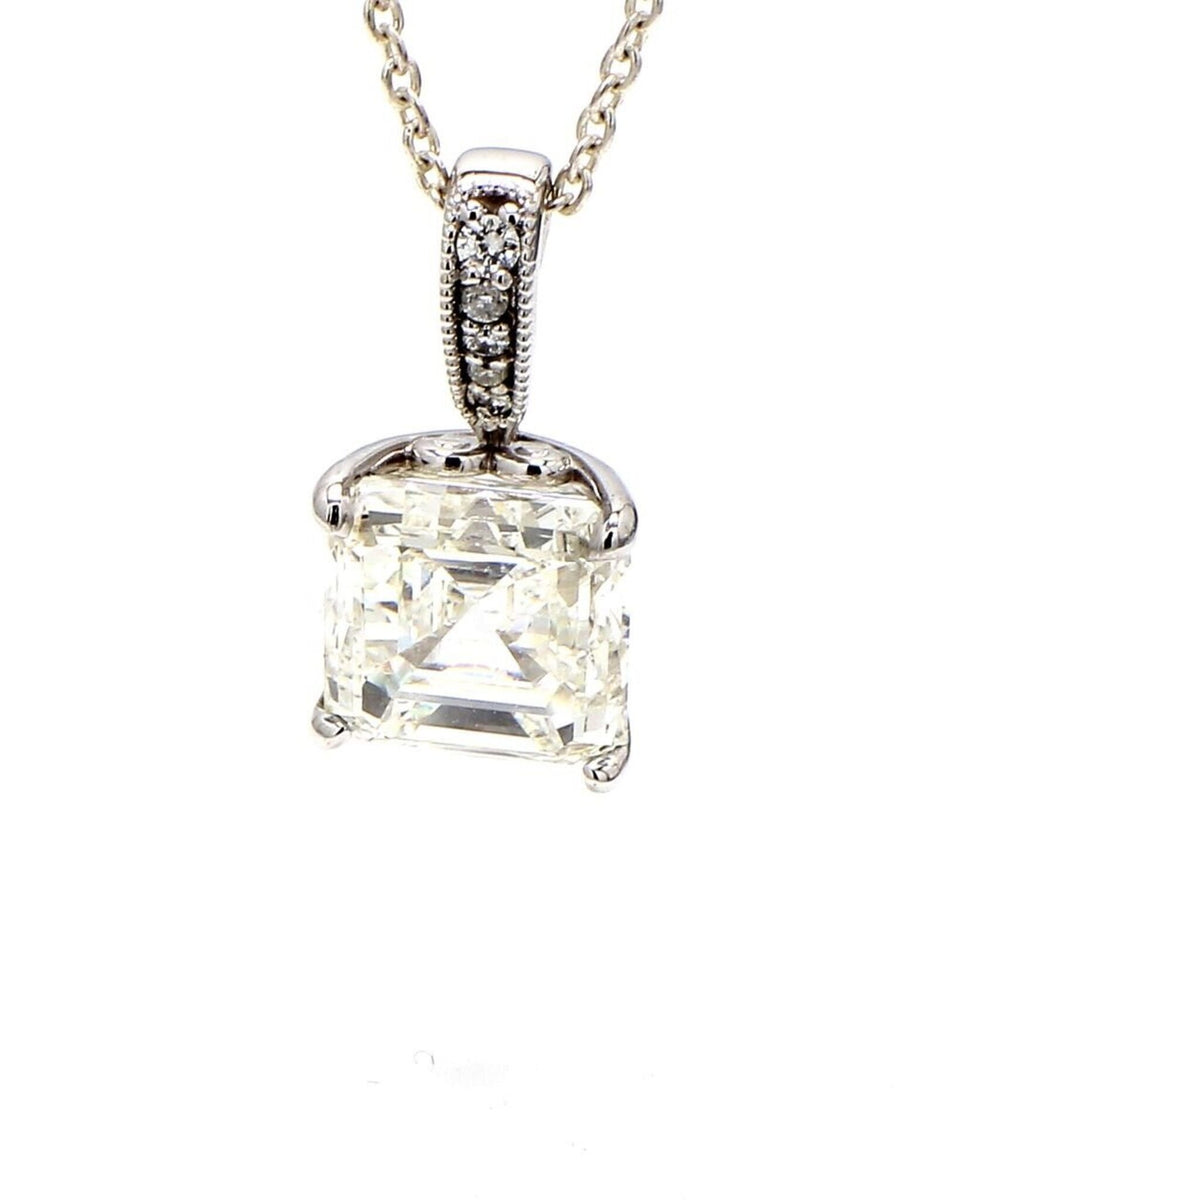 Ninacci 18K White Gold Asscher-Cut Diamond Pendant - 6.24 Carat Total Diamond Weight